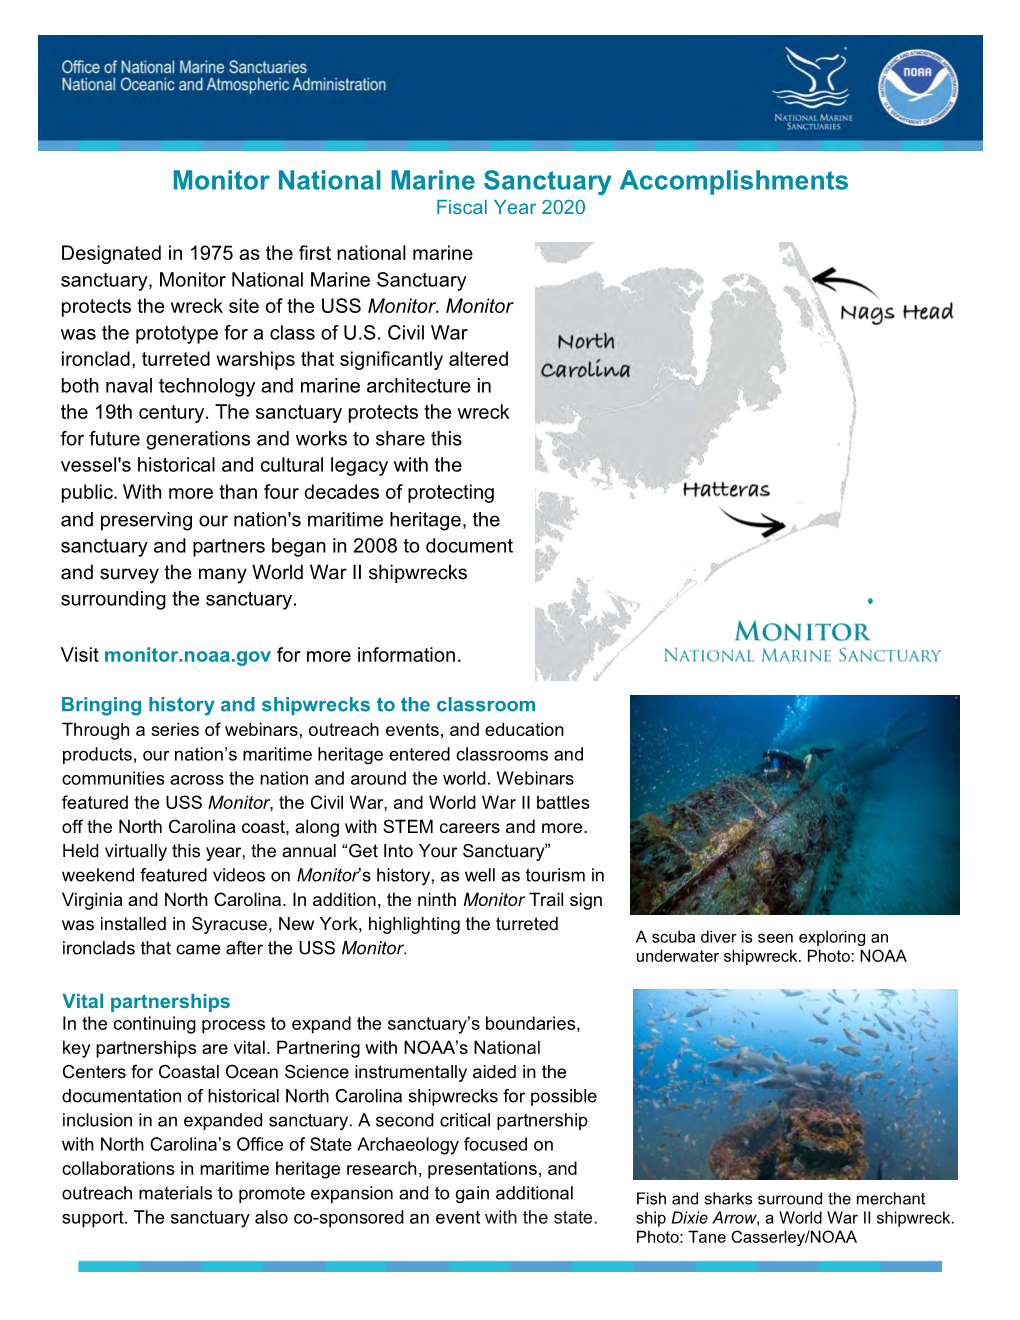 Monitor National Marine Sanctuary Fiscal Year 2020 Accomplishments